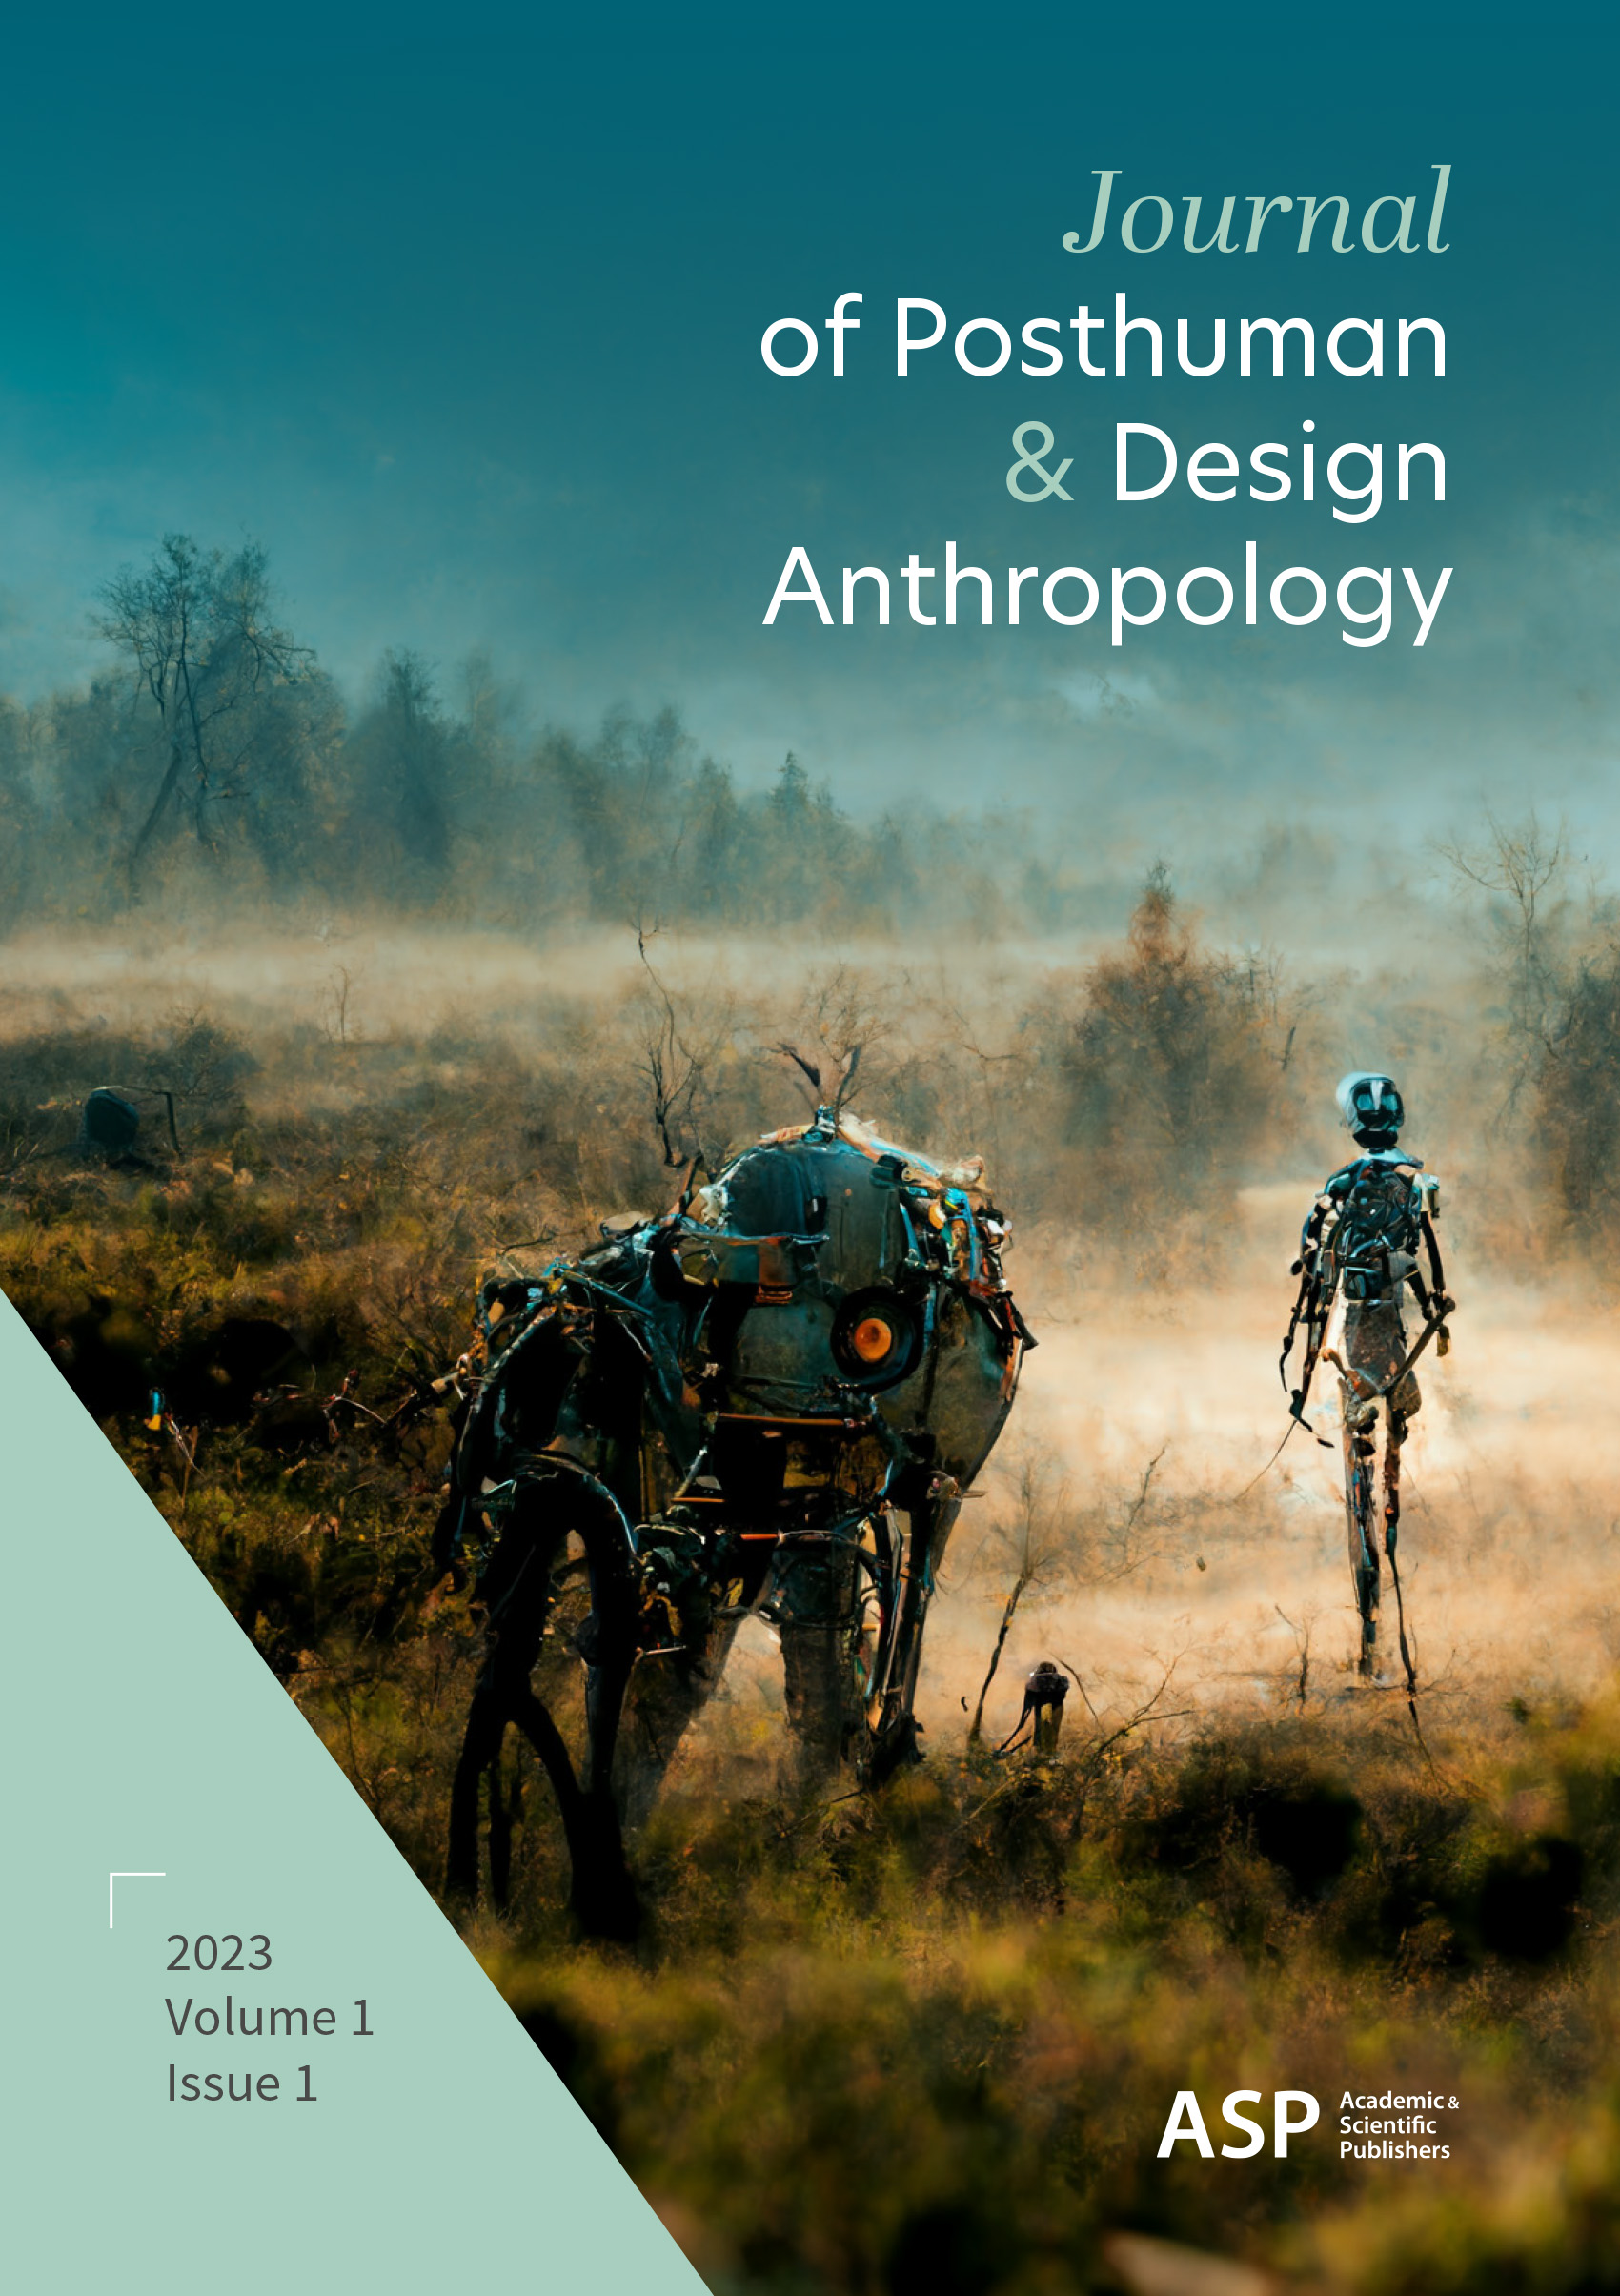 JOURNAL OF POSTHUMAN & DESIGN ANTHROPOLOGY